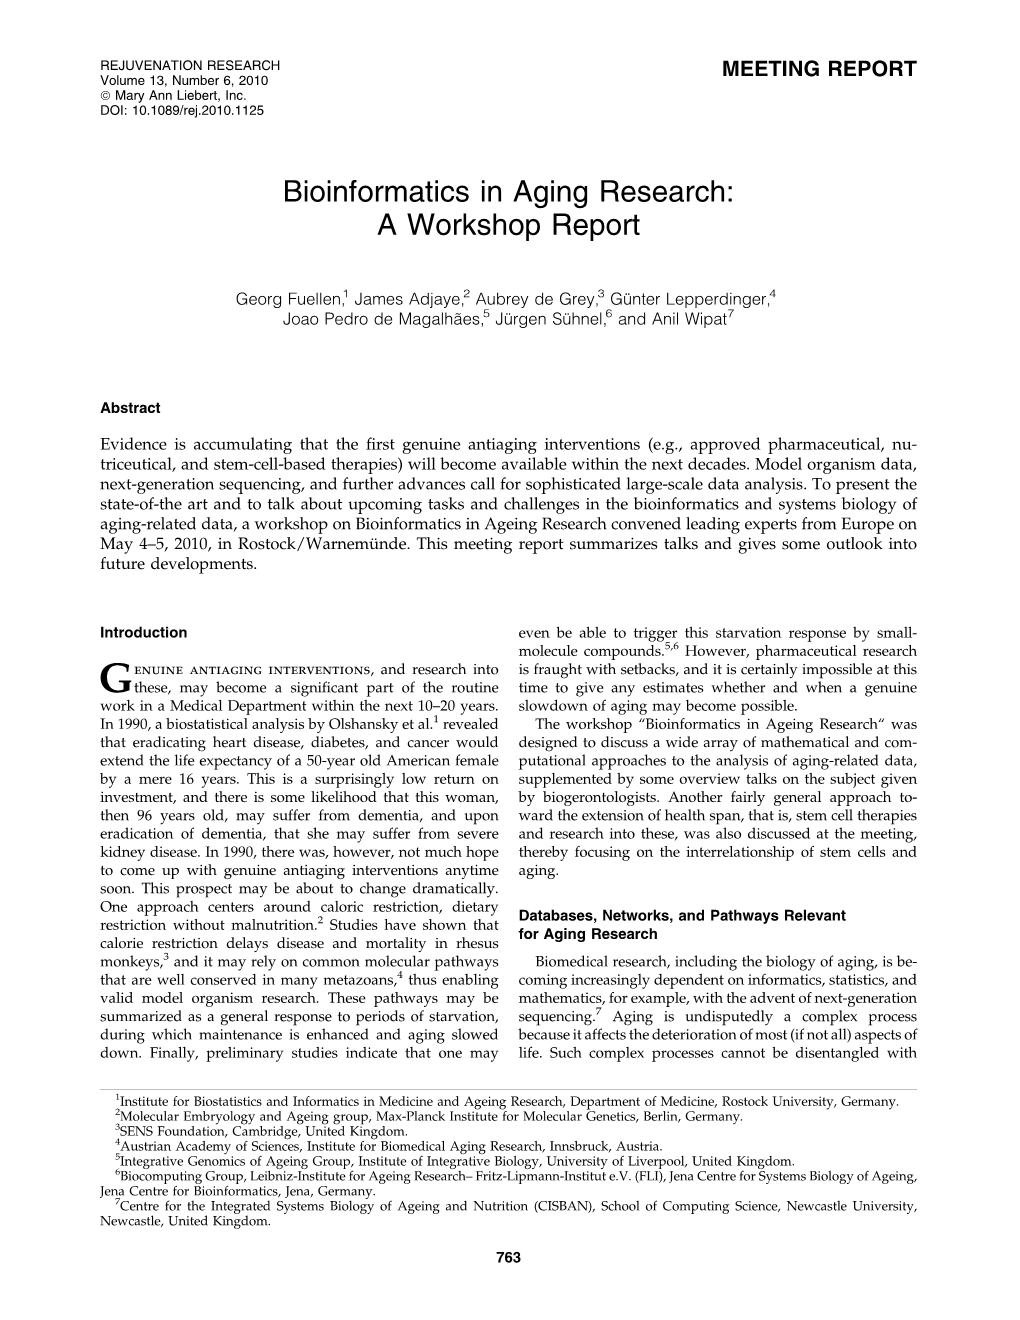 Bioinformatics in Aging Research: a Workshop Report